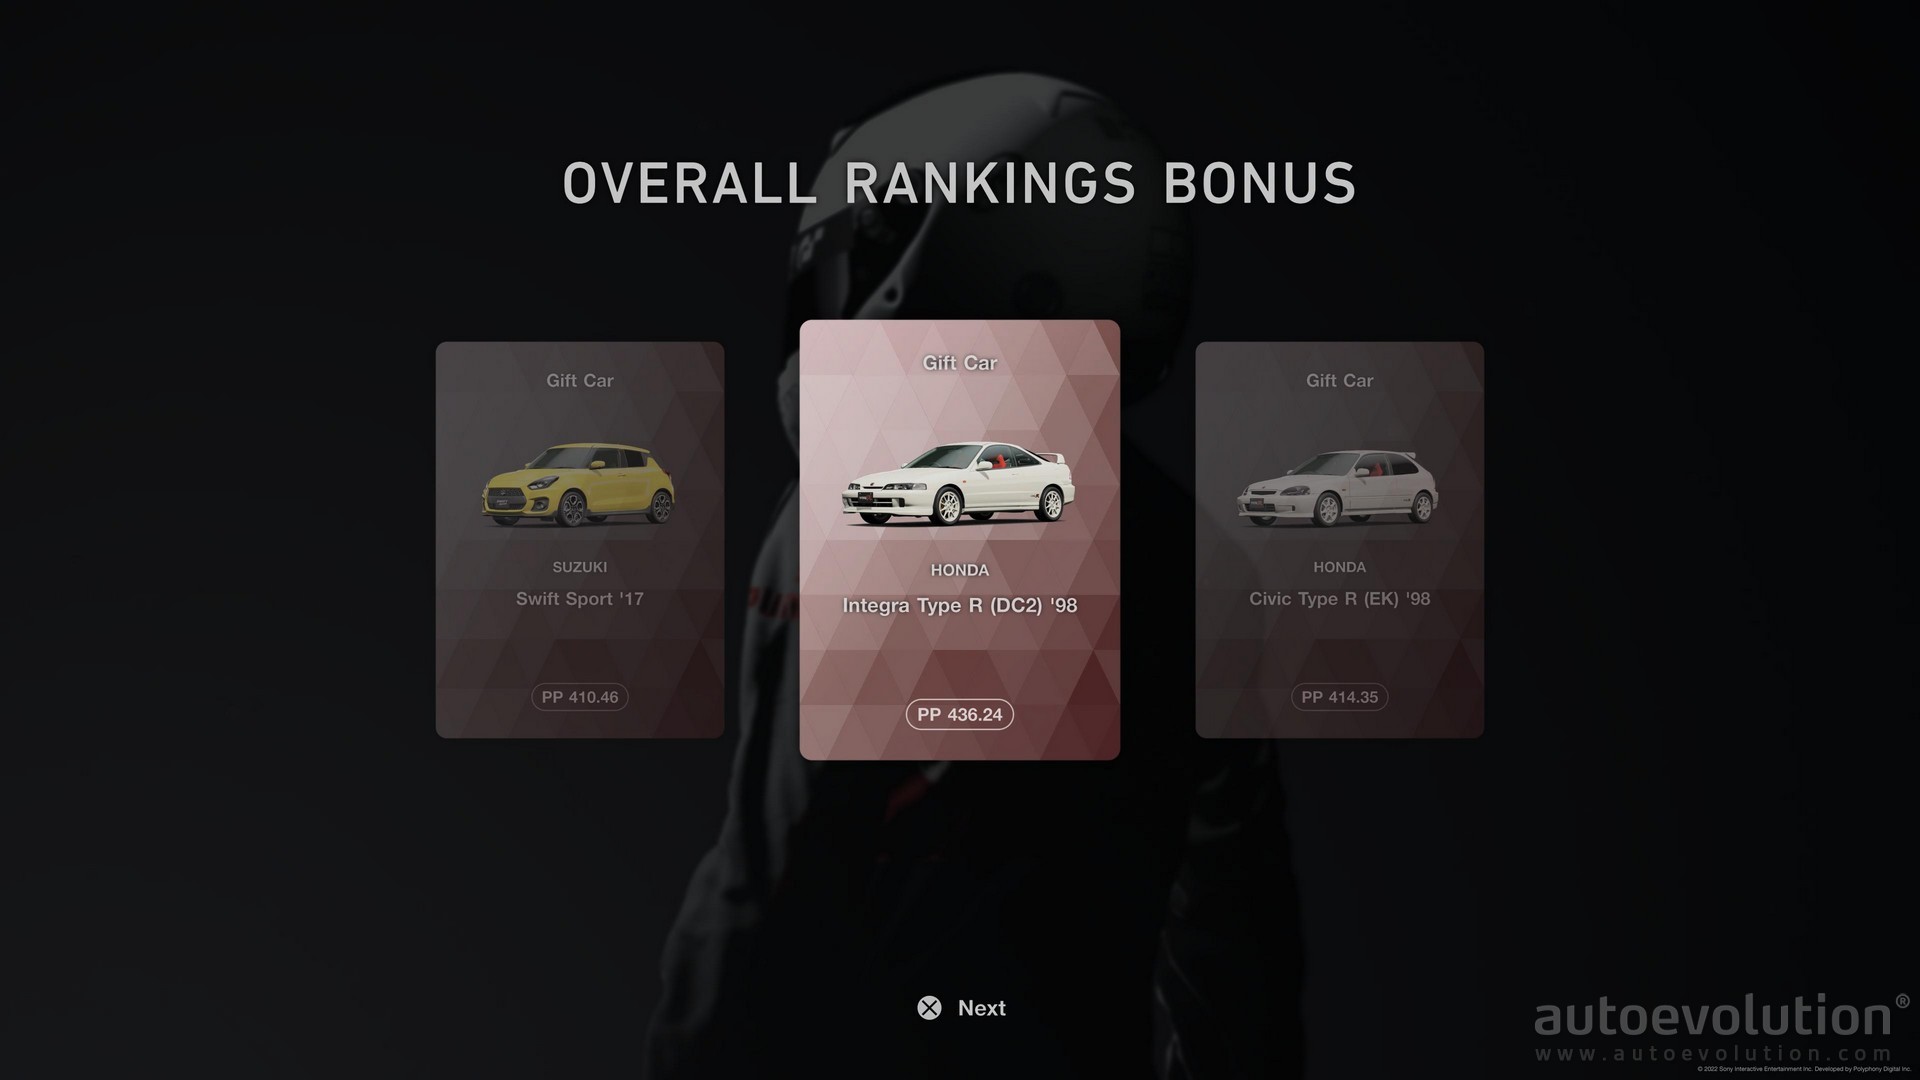 Gran Turismo 7 Update increases rewards